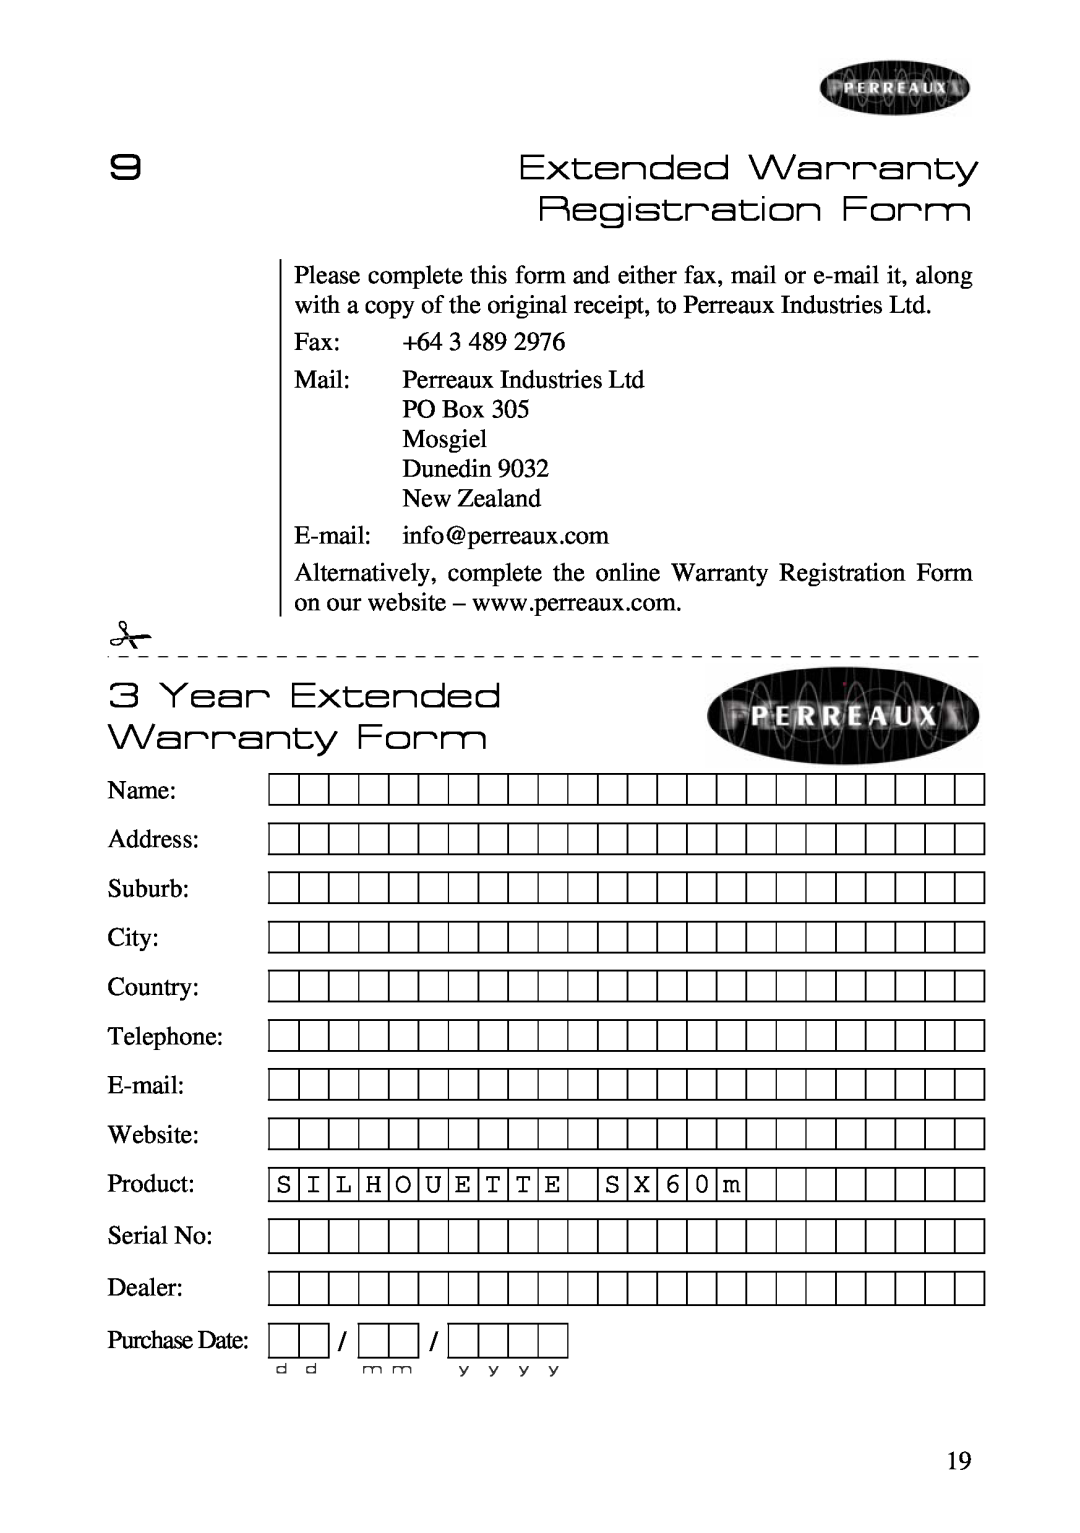 Perreaux SX60m manual Extended Warranty Registration Form, Year Extended Warranty Form, S I L H O U E T T E S X 6 0 m 